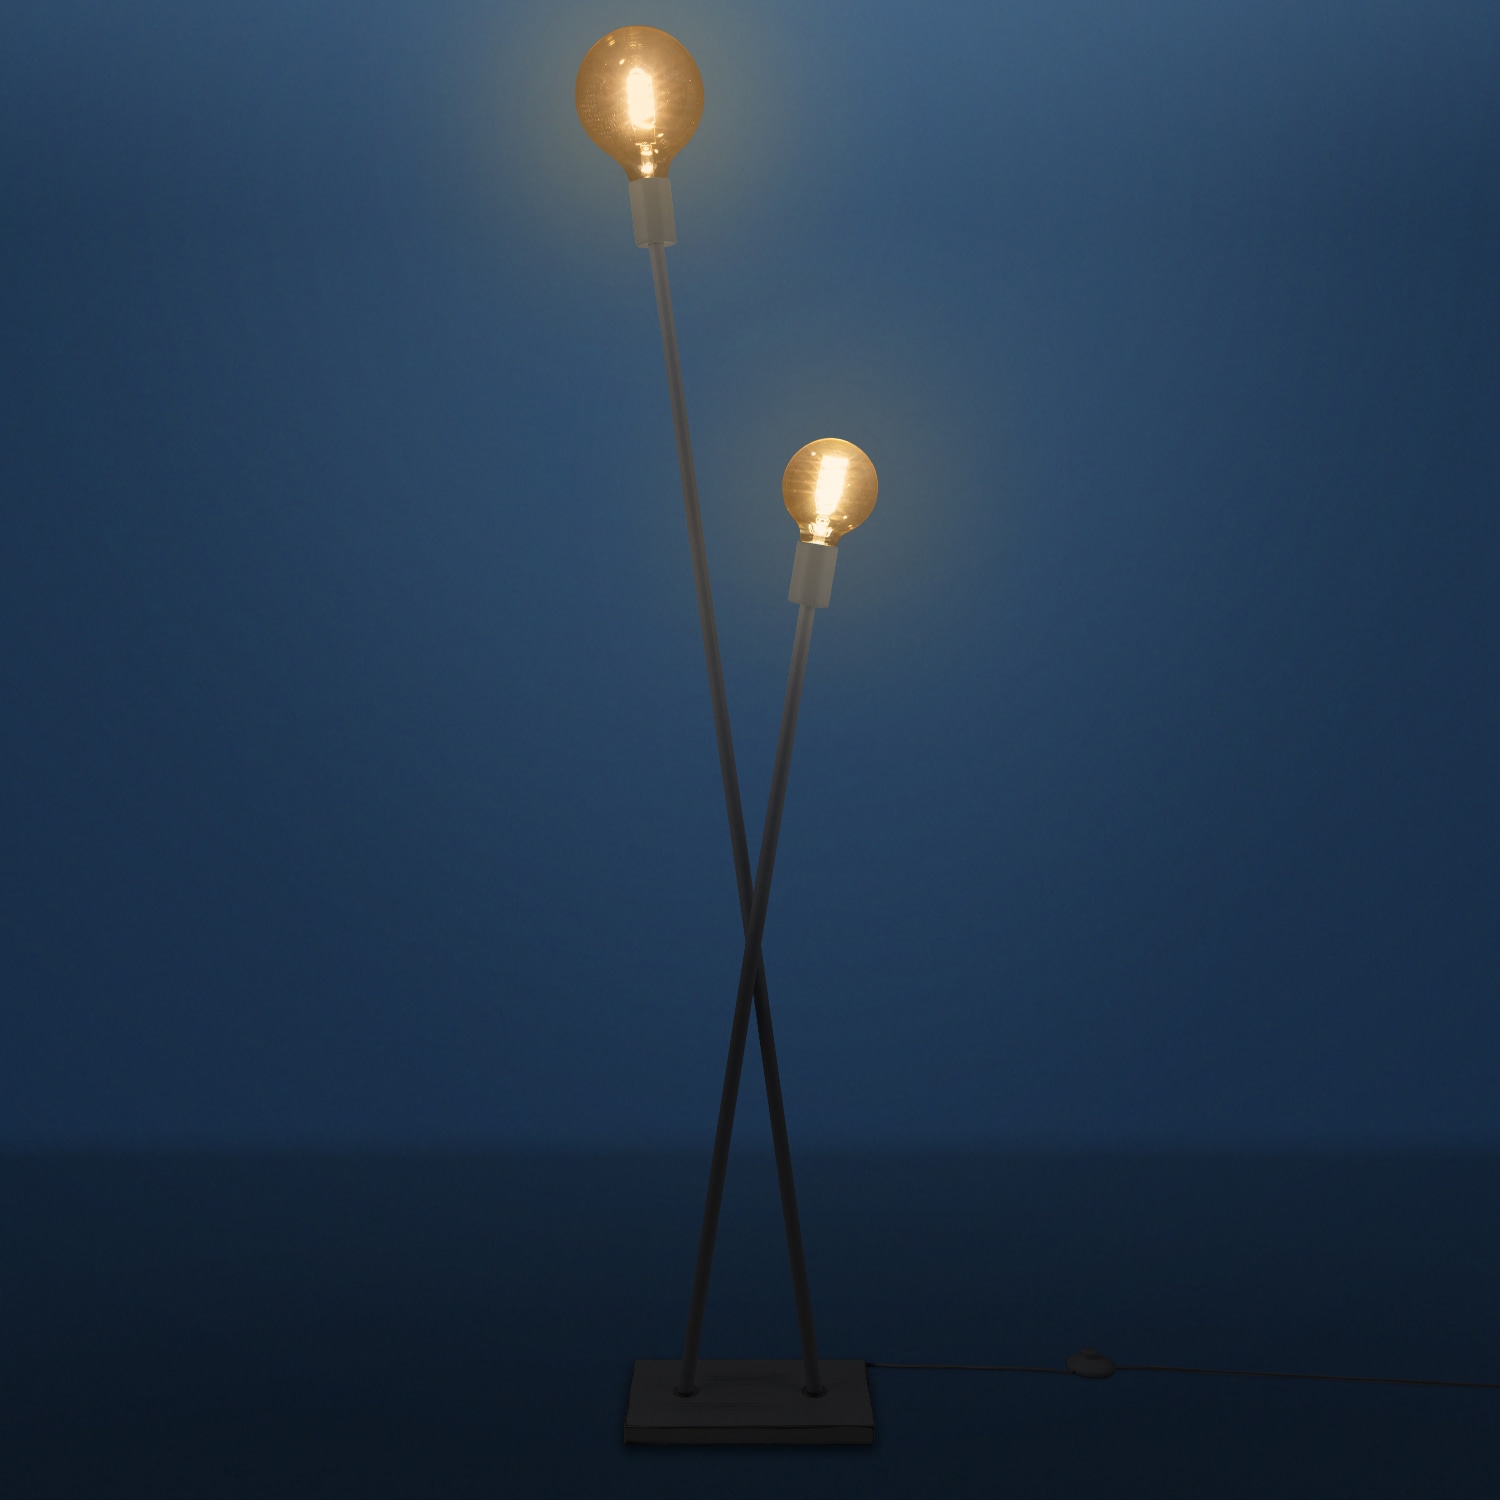 LED online Paco E27 2 Stehlampe Design Vintage bestellen Stehlampe Industrial Wohnzimmer »IKS«, Home flammig-flammig, Retro Lampe